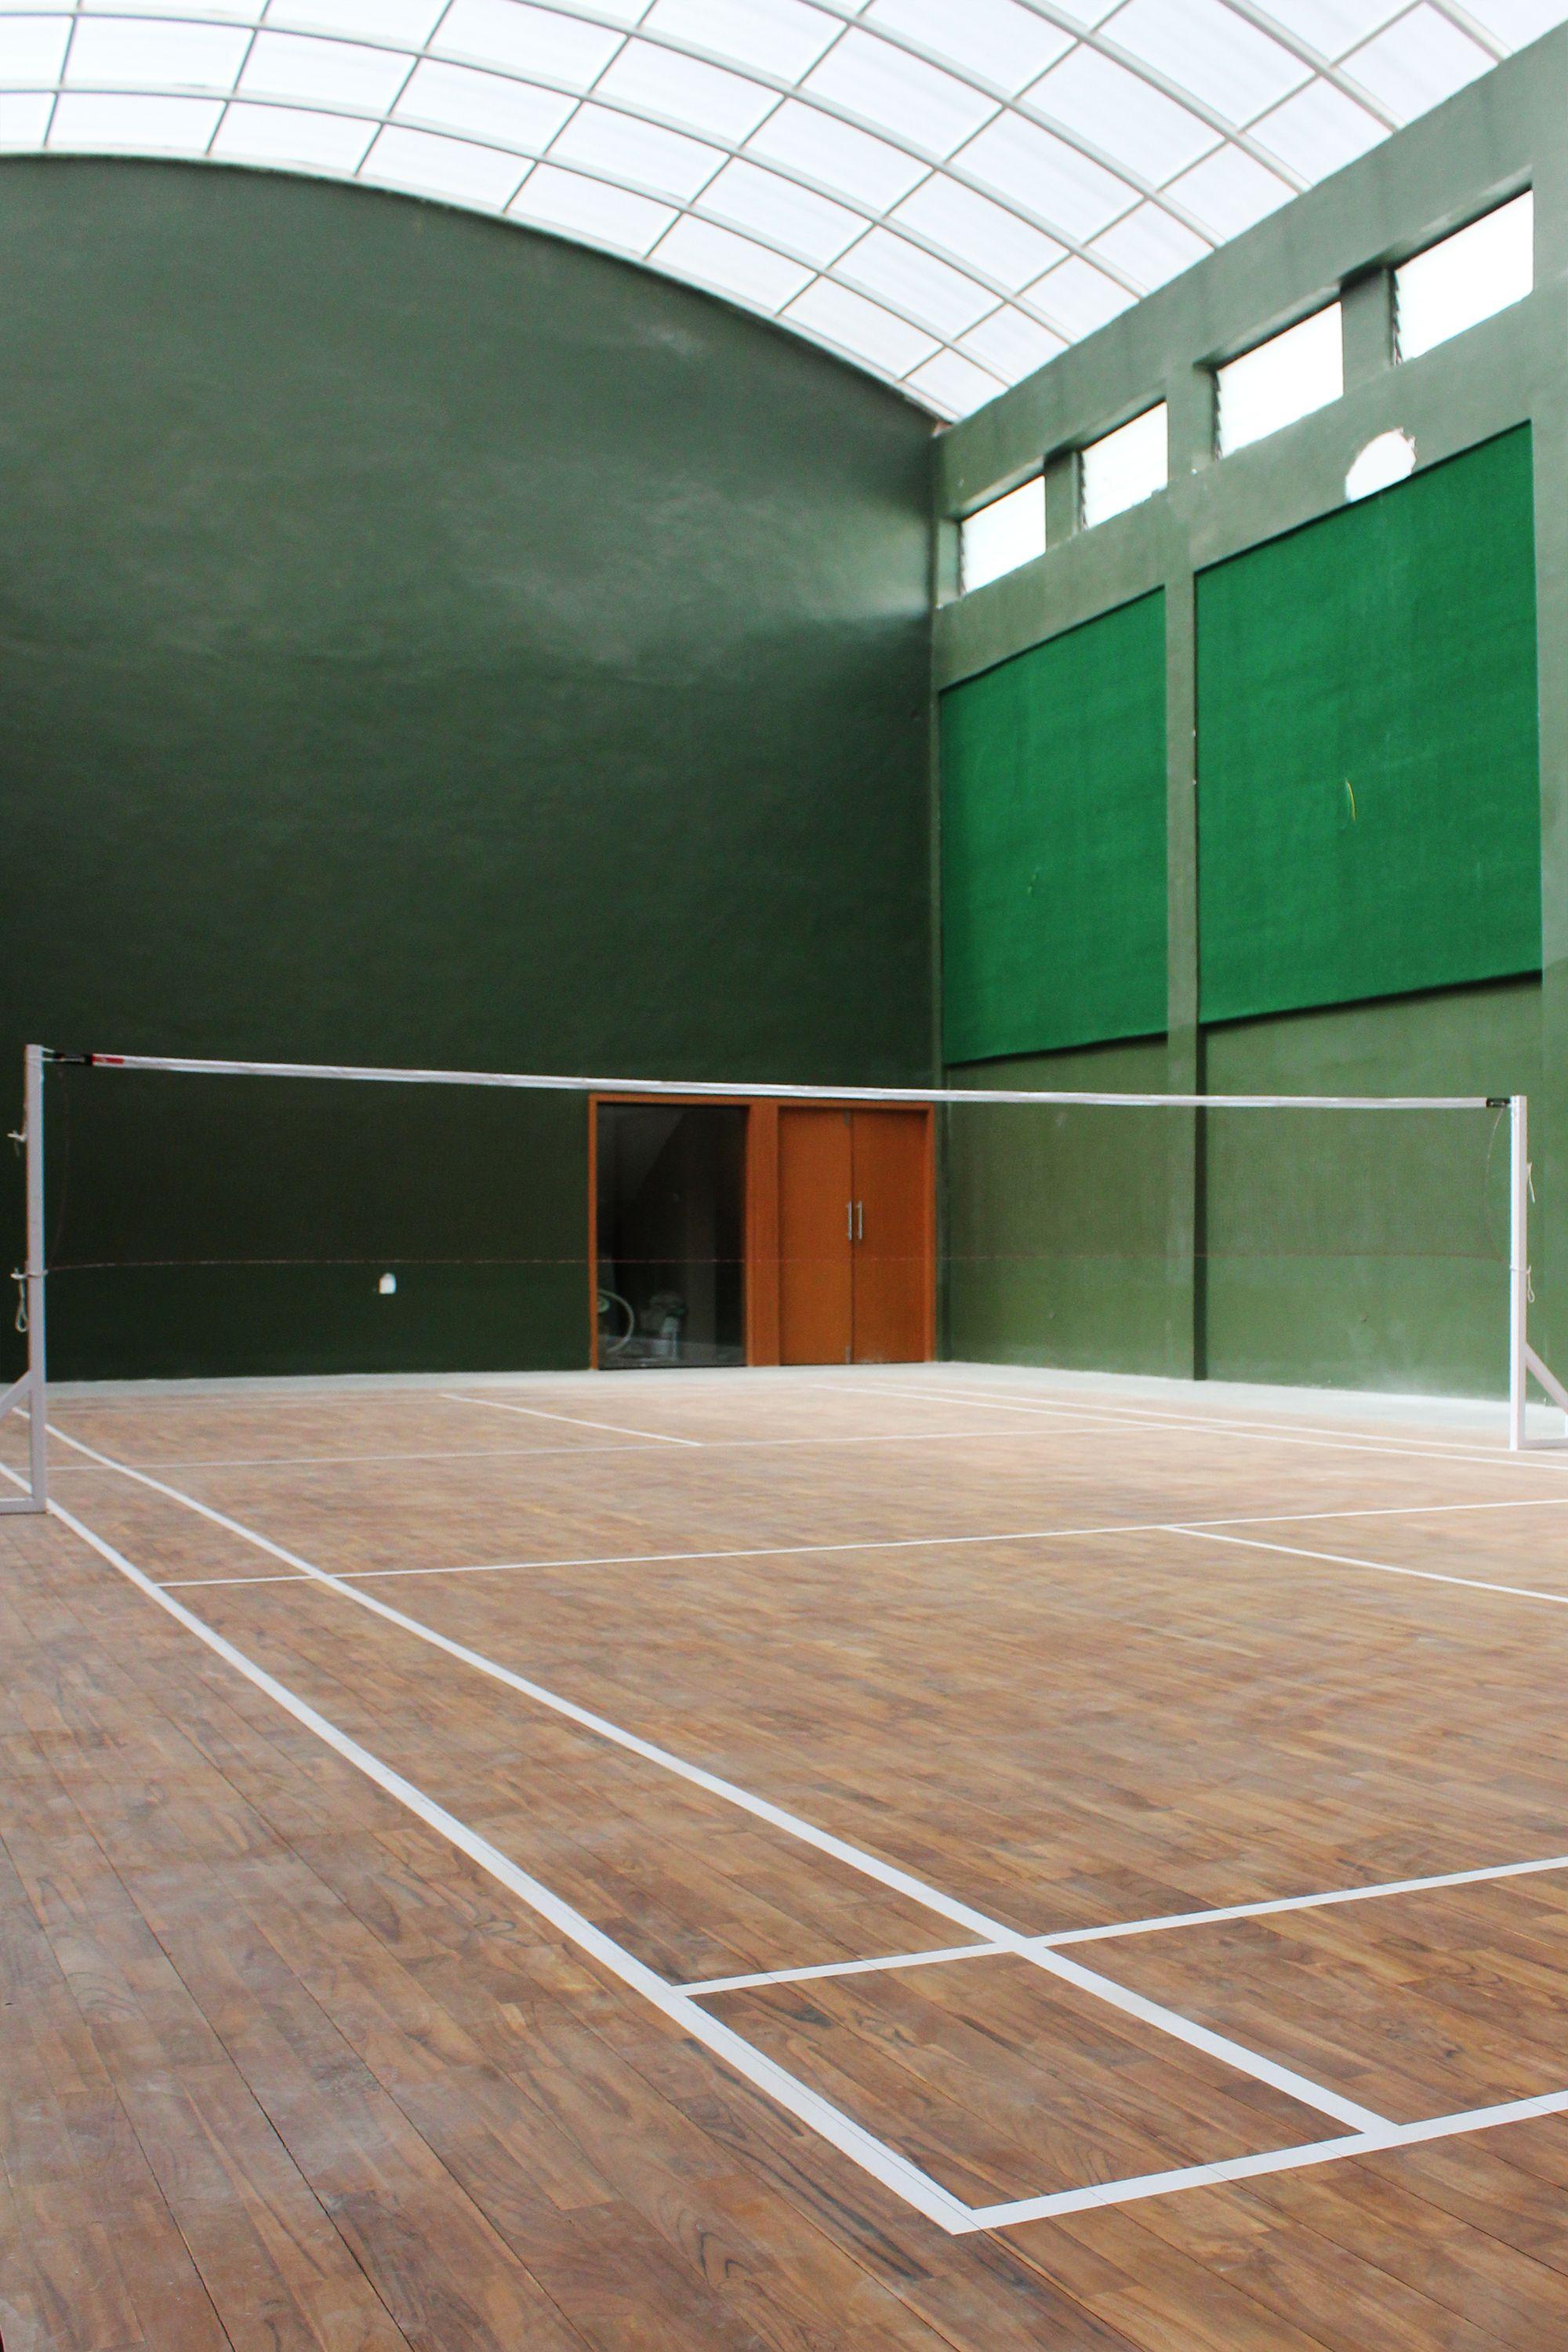 Well Lit New Badminton Court